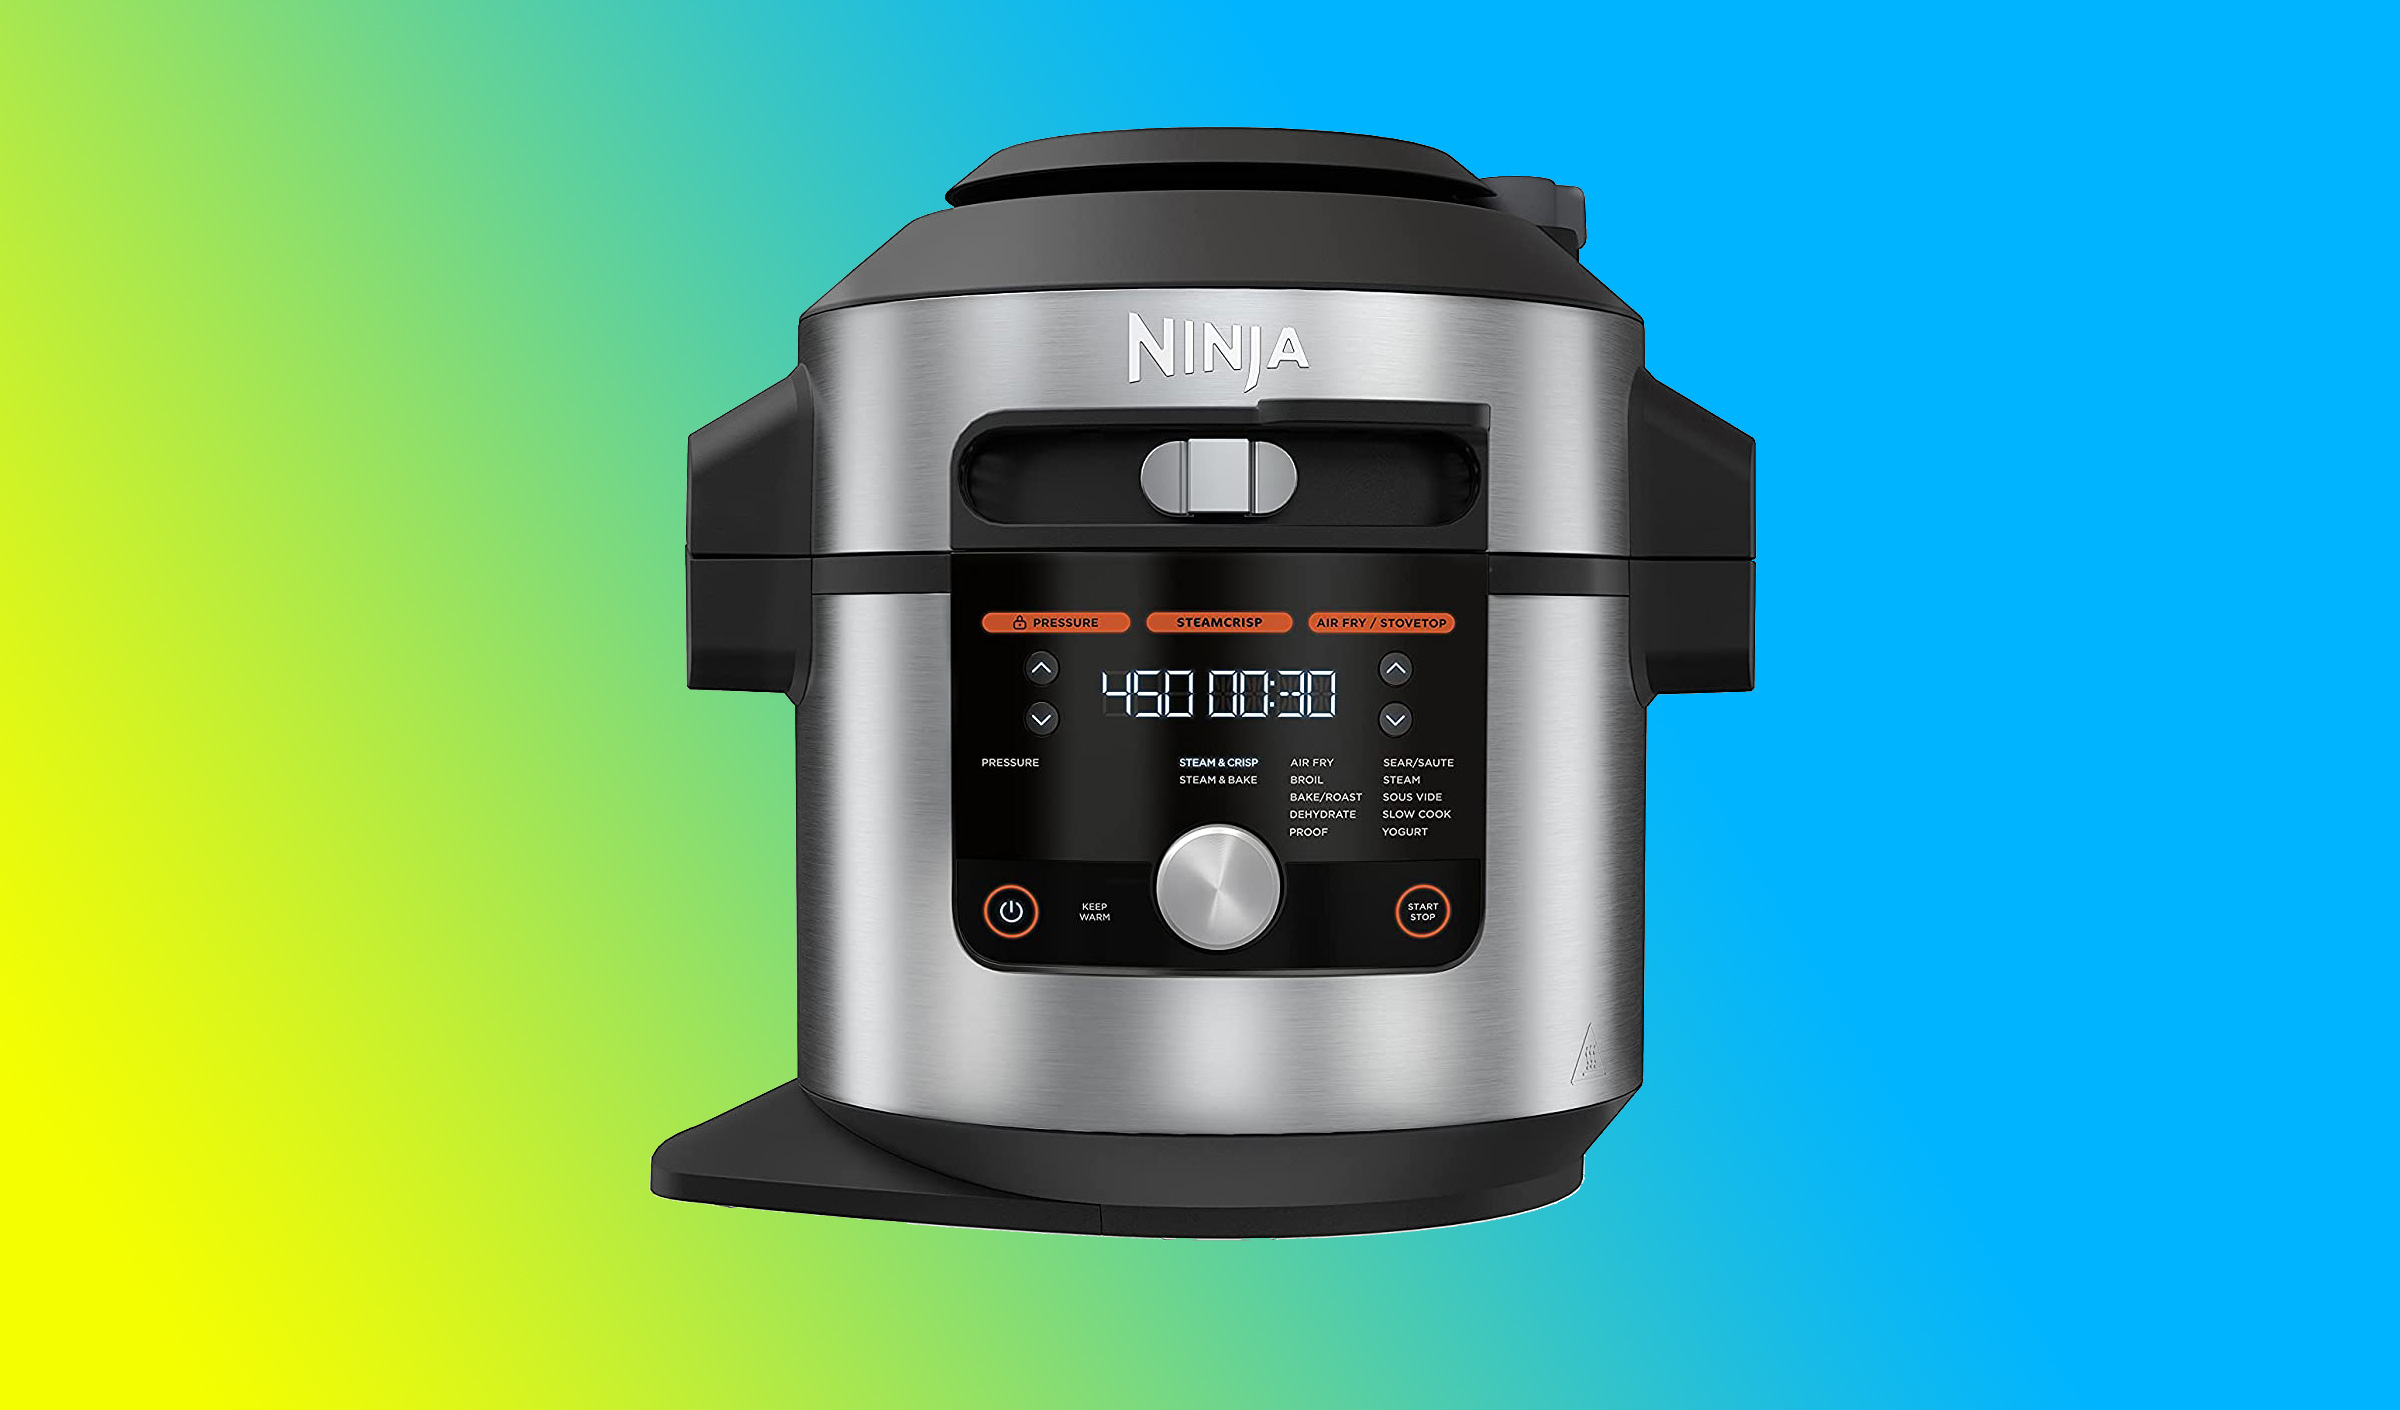 Hot Product Alert! We Review the Ninja AF 101 Air Fryer! 